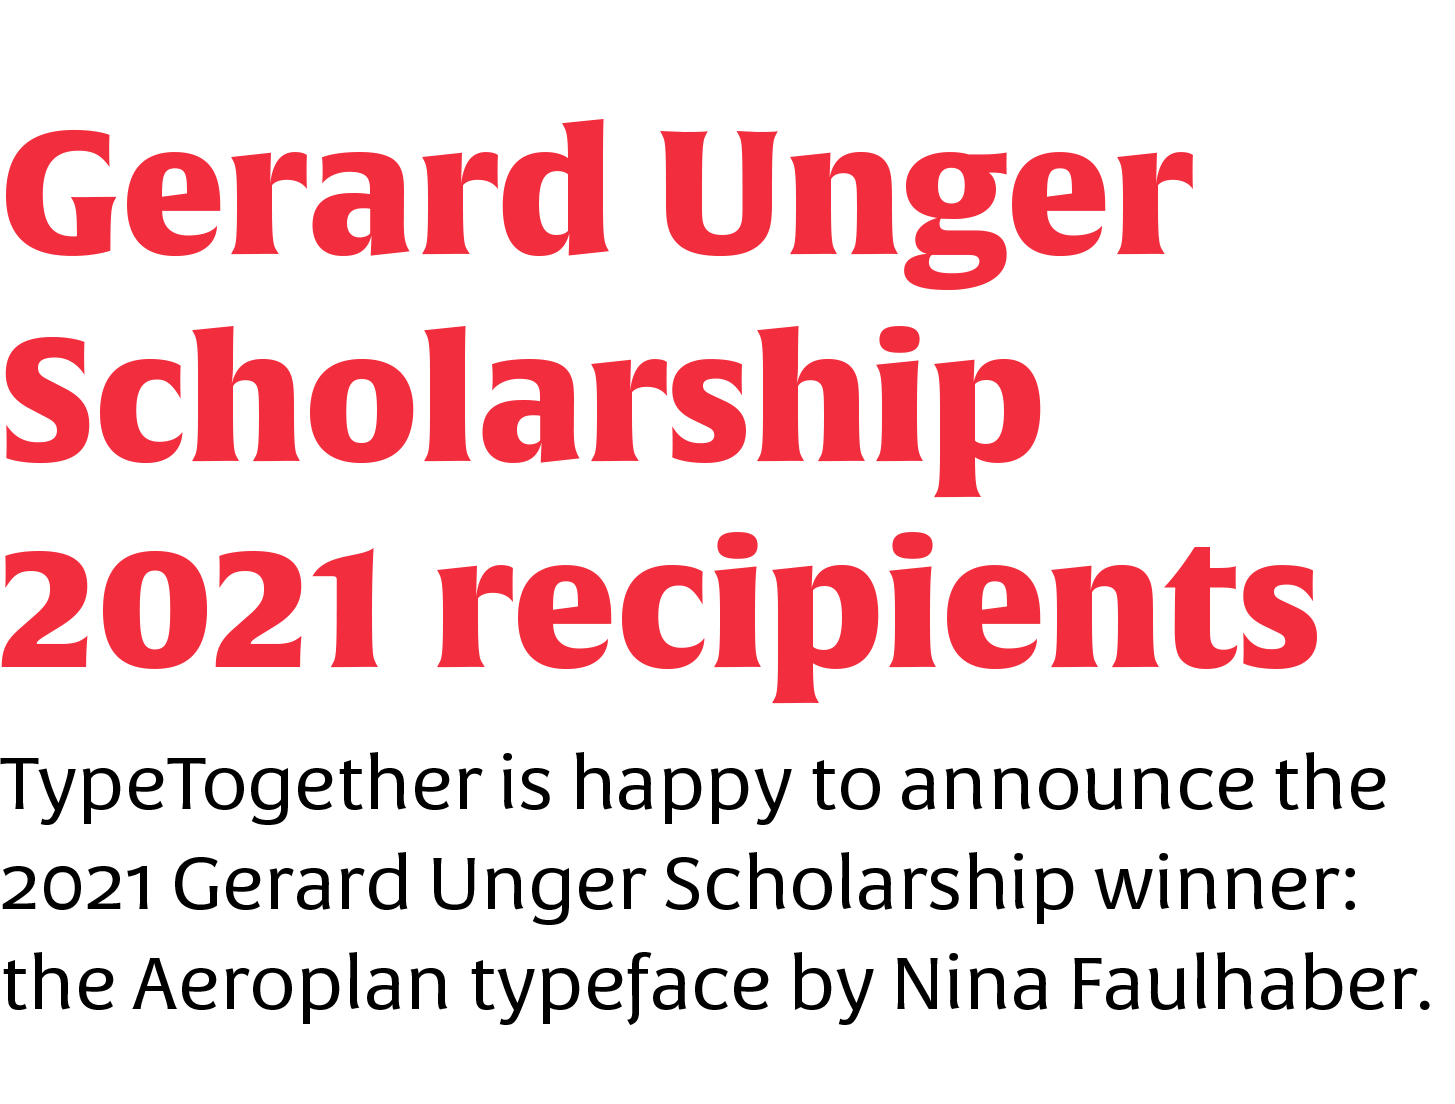 Gerard Unger Scholarship 2021 recipient Nina Faulhaber